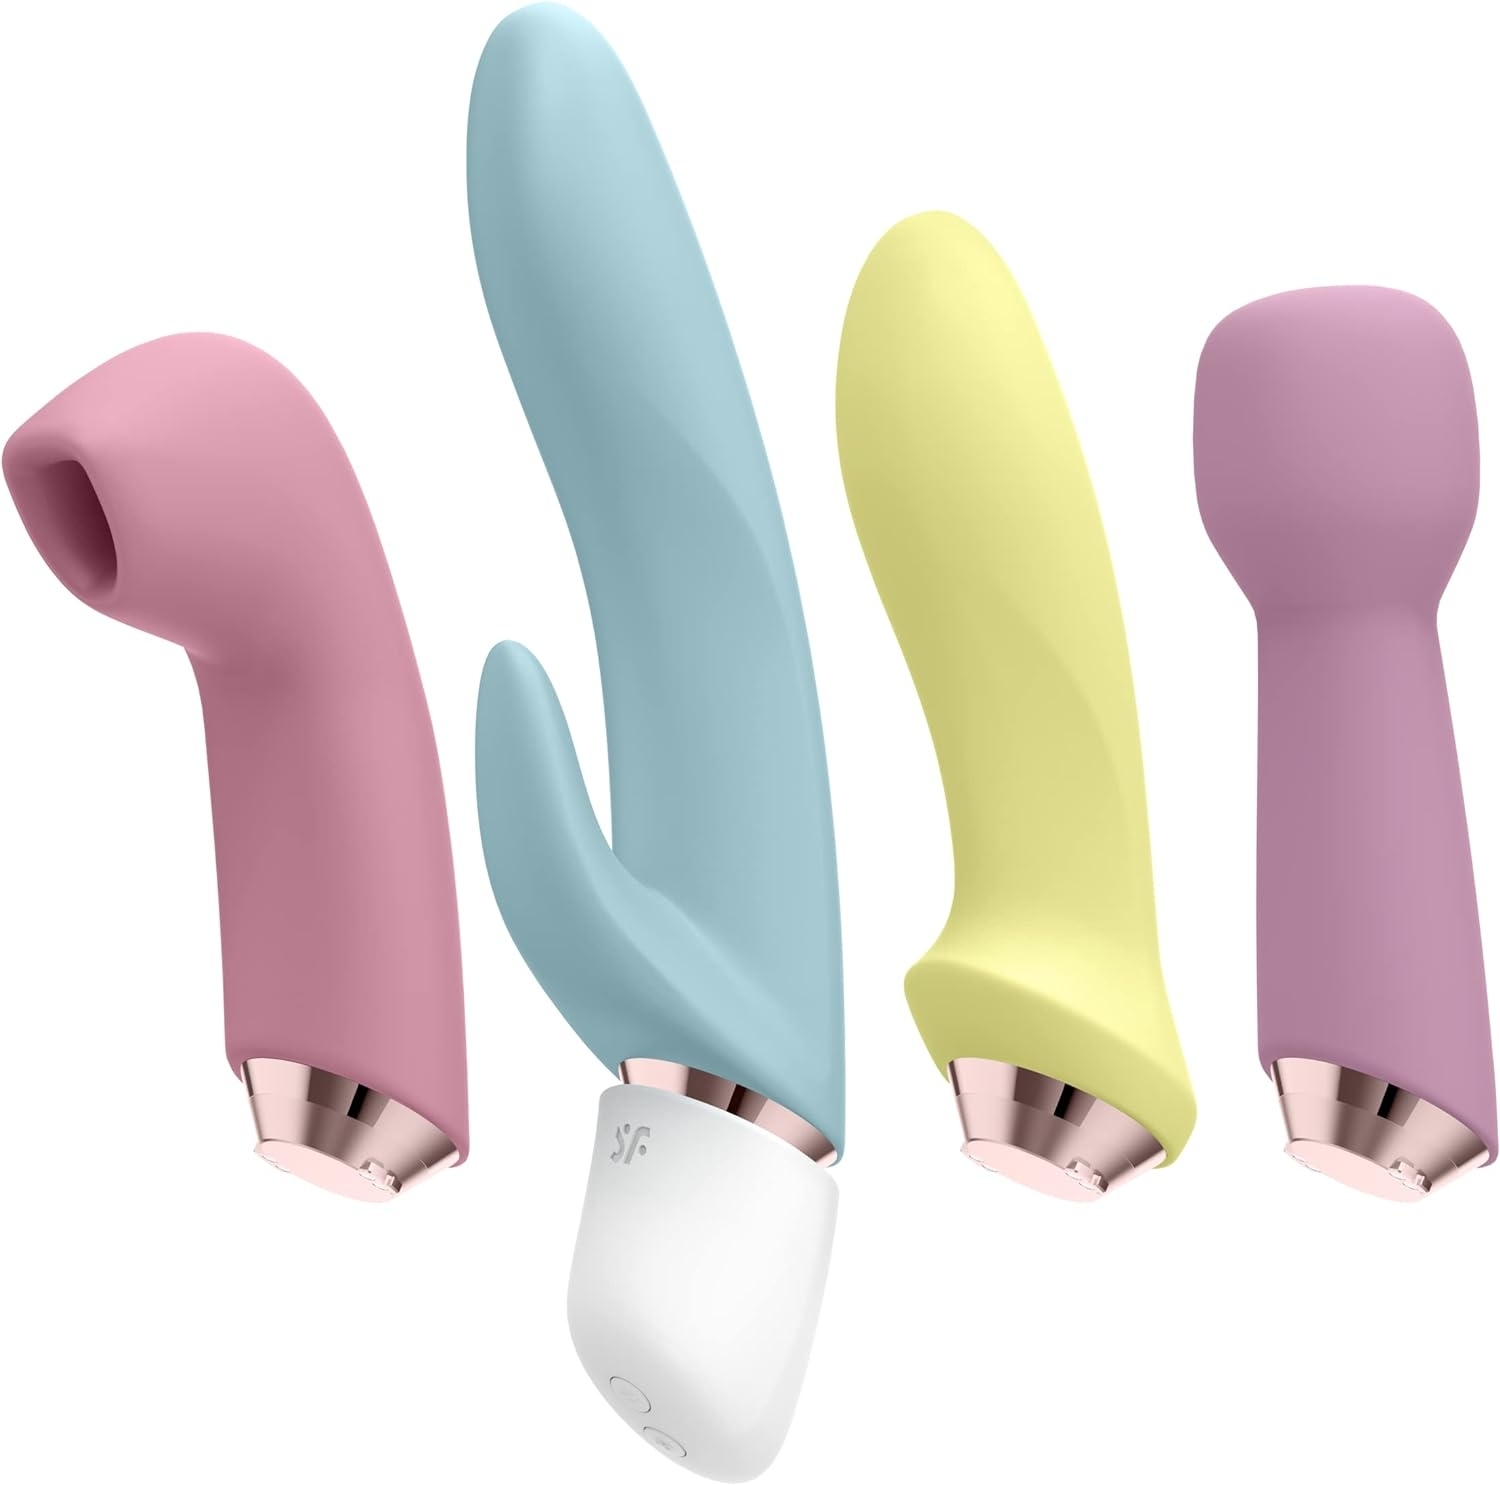 Pink air stimulating attachment, blue rabbit vibrator head attached to white vibrator base, yellow g-spot attachment, and purple wand attachment